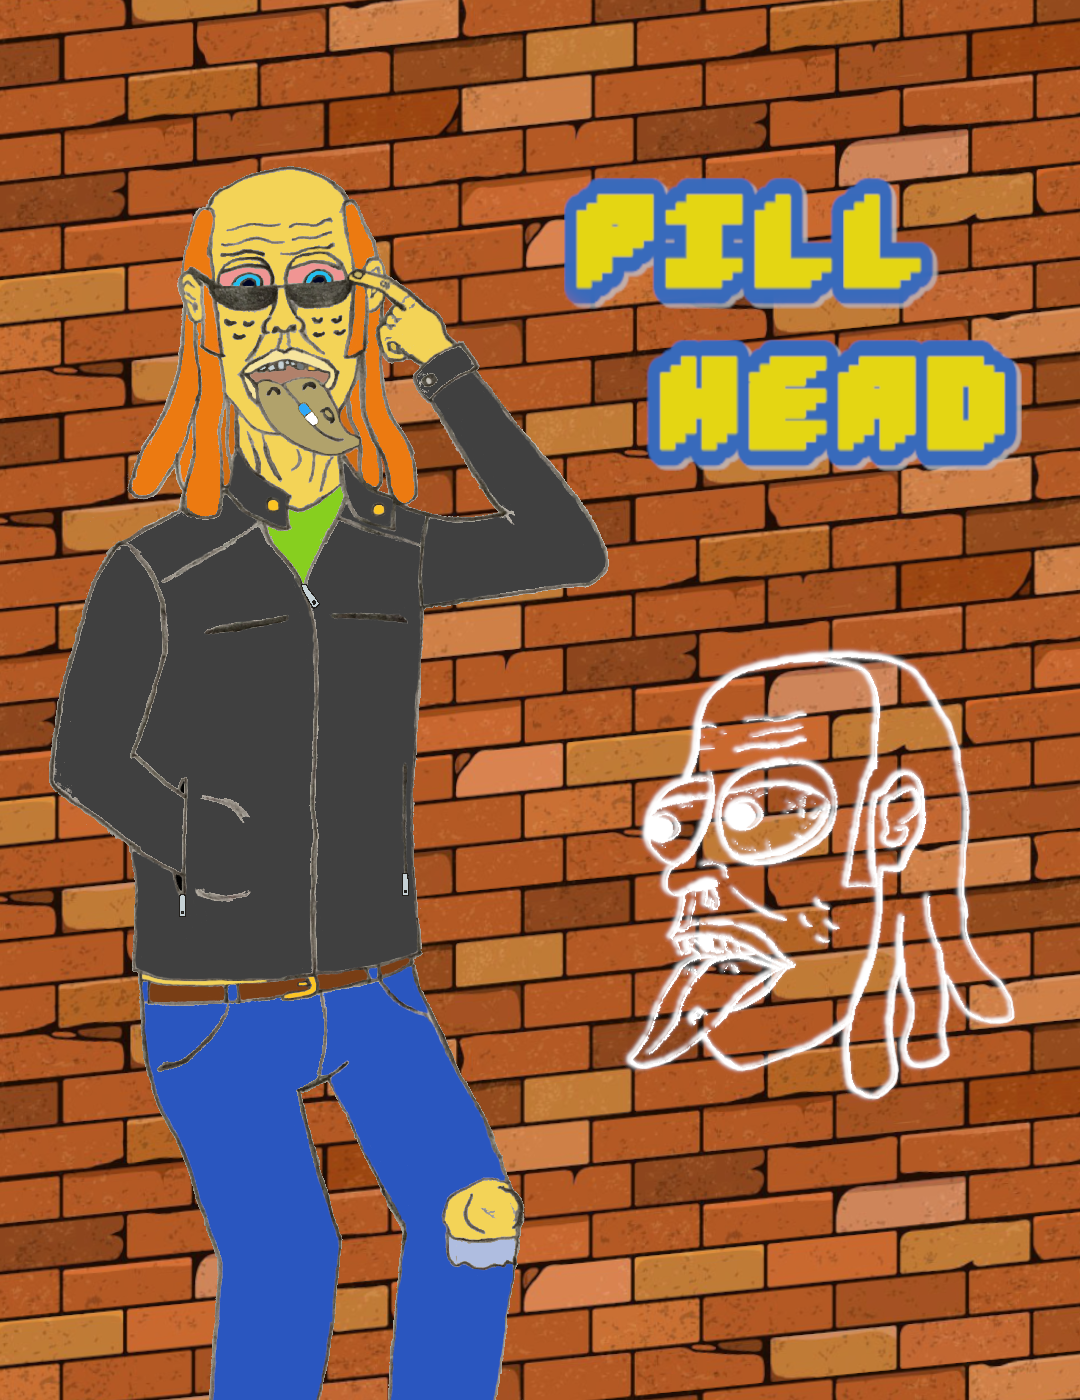 Pill Head Slick by Pill-Hed on DeviantArt